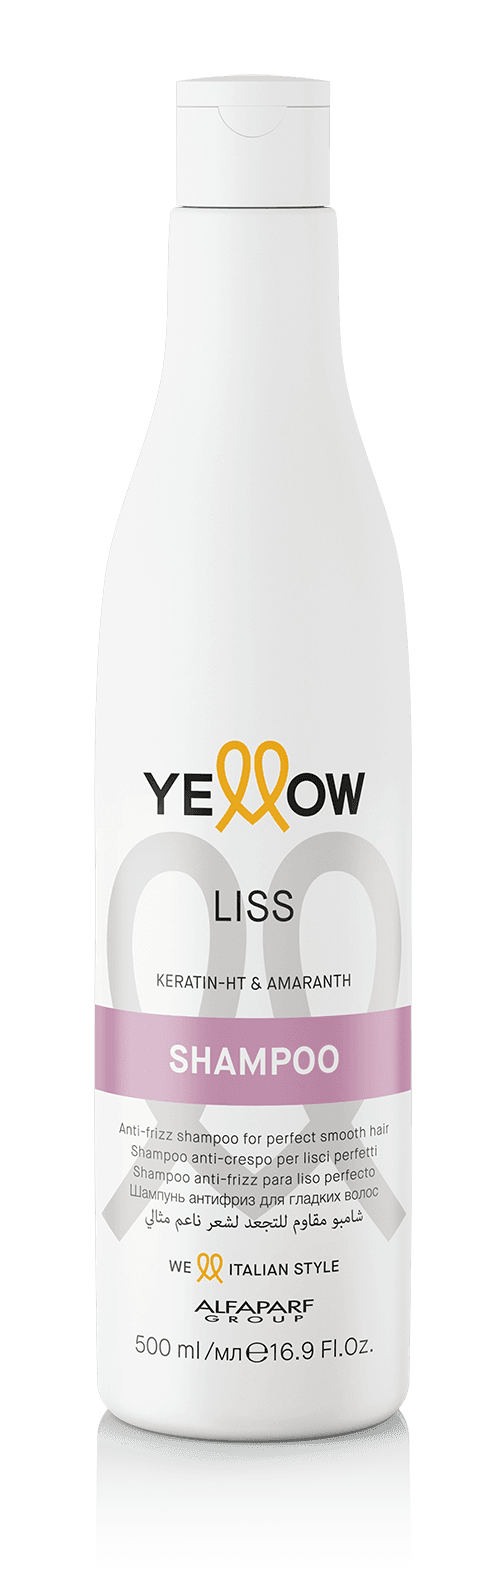 YELLOW Šampon Liss 500ml